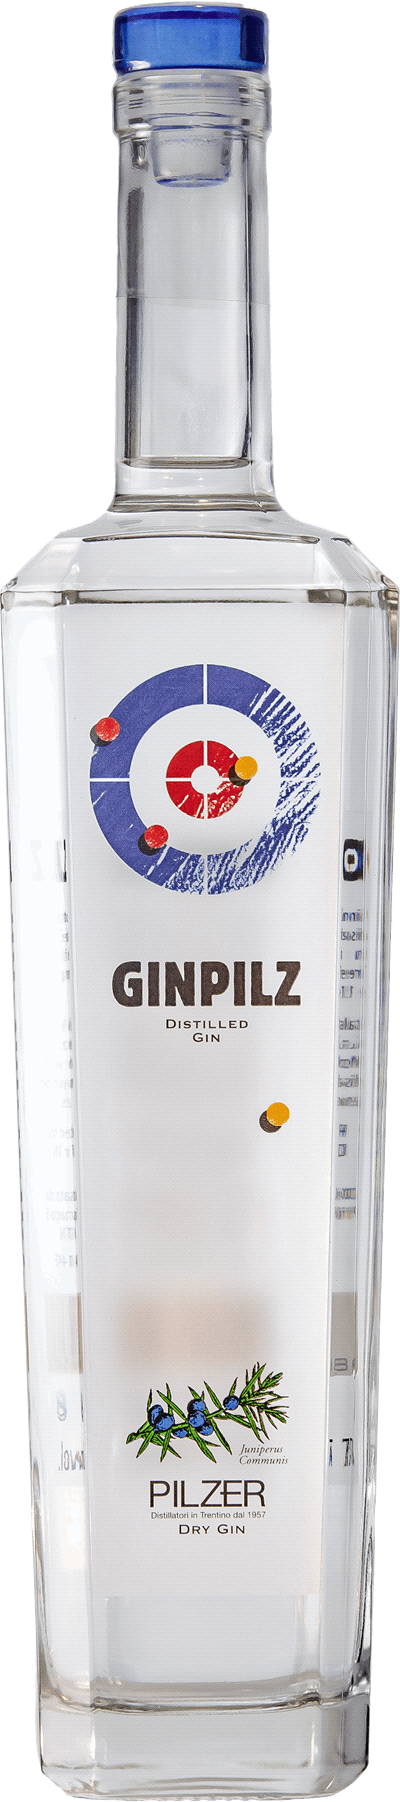 Produktbild för Ginpilz